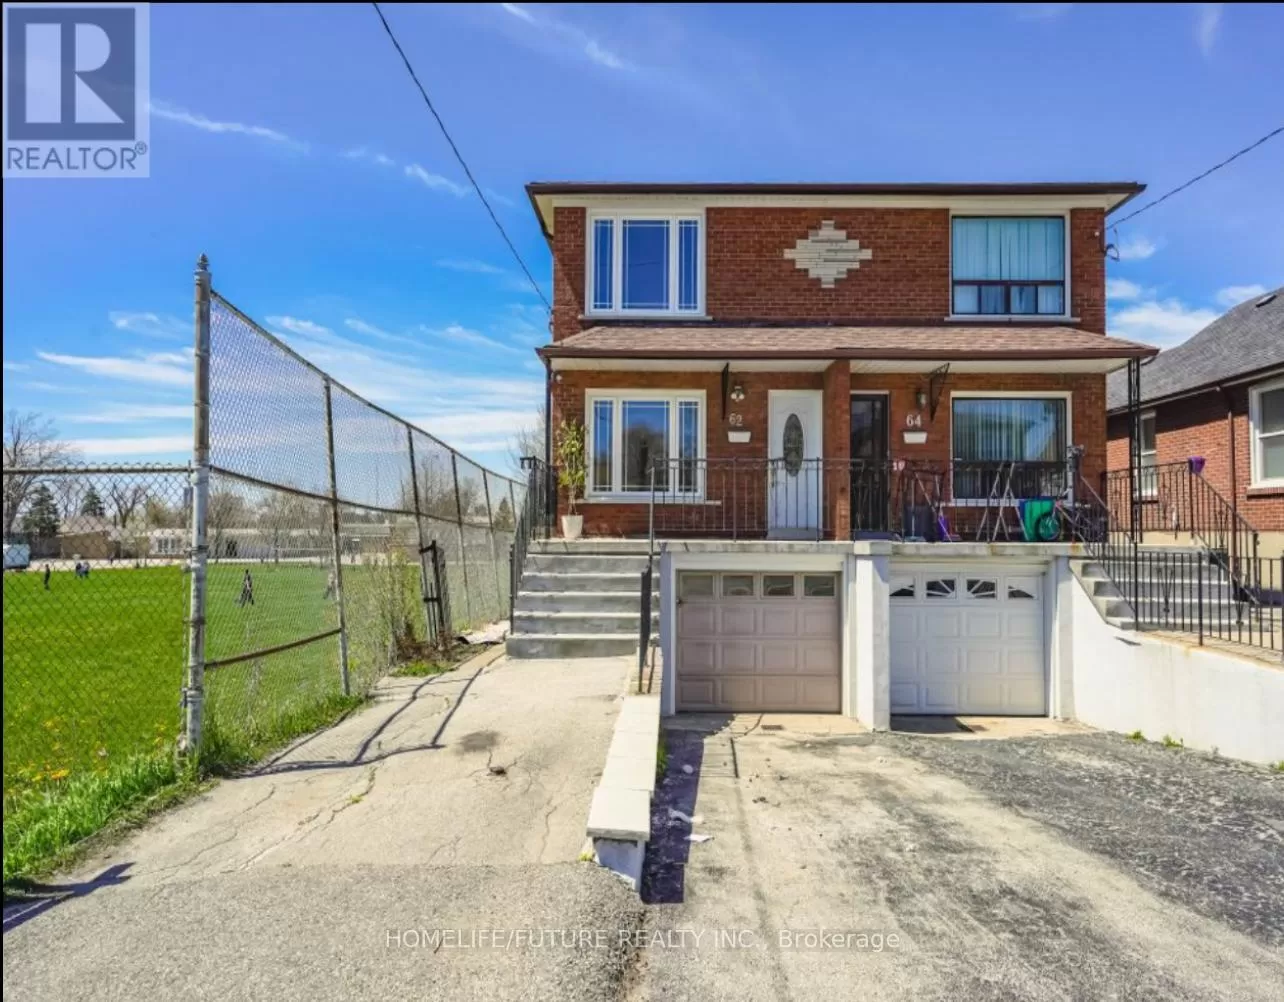 Duplex for rent: 62 North Edgely Avenue, Toronto, Ontario M1K 1T7